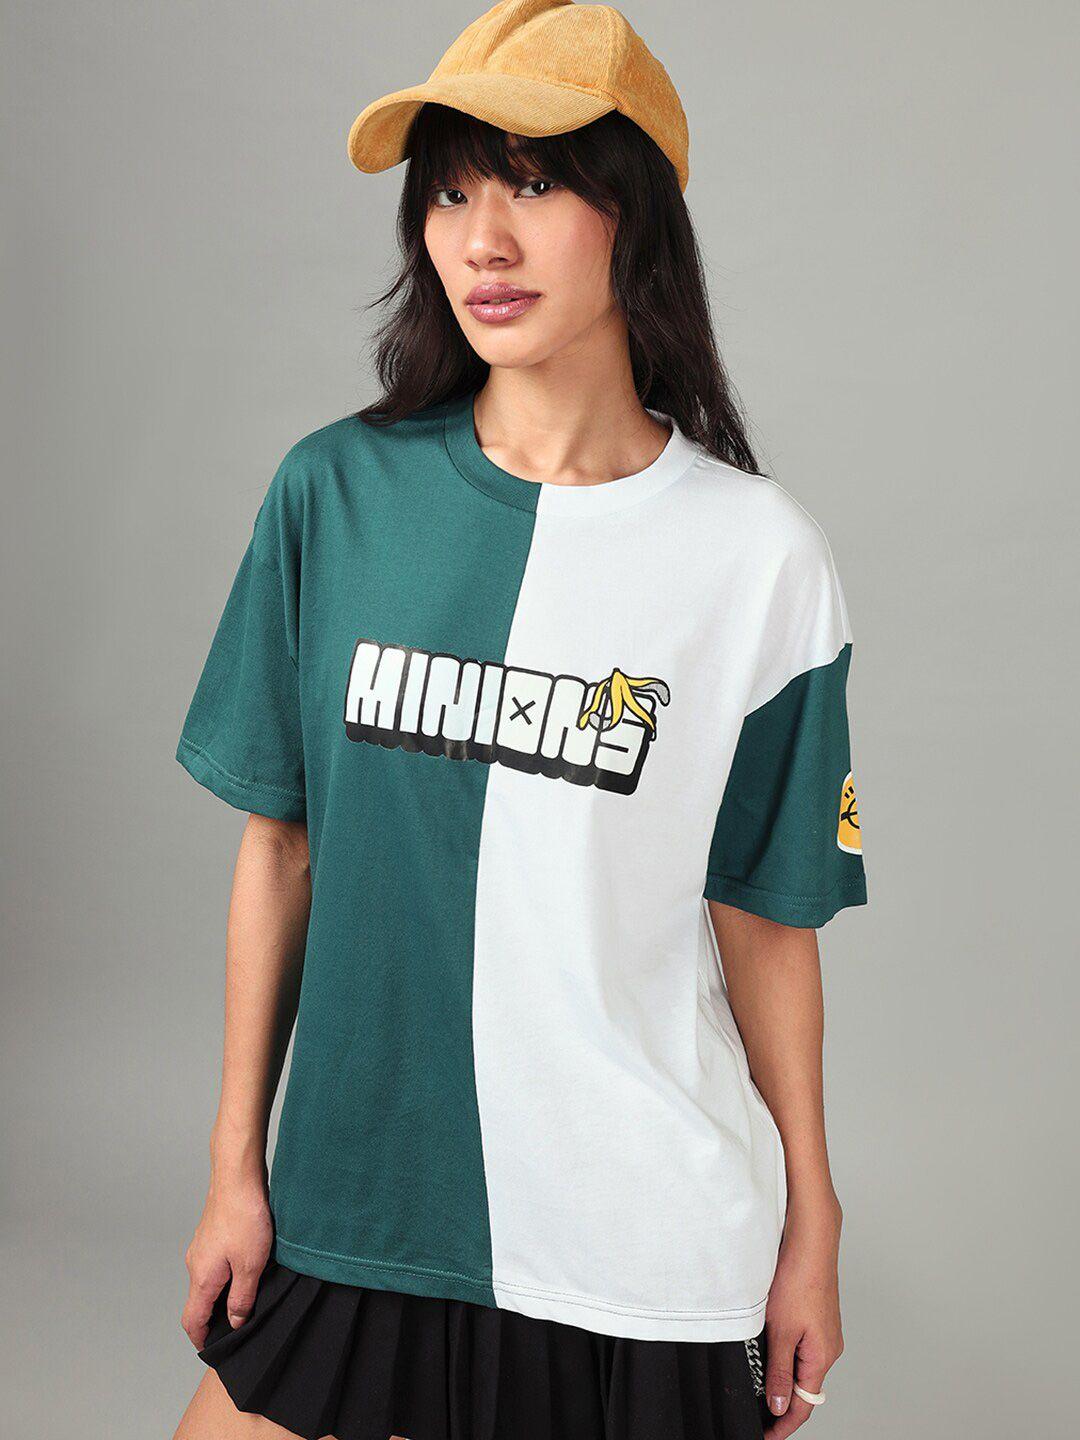 bewakoof official minions merchandise printed oversized t-shirt